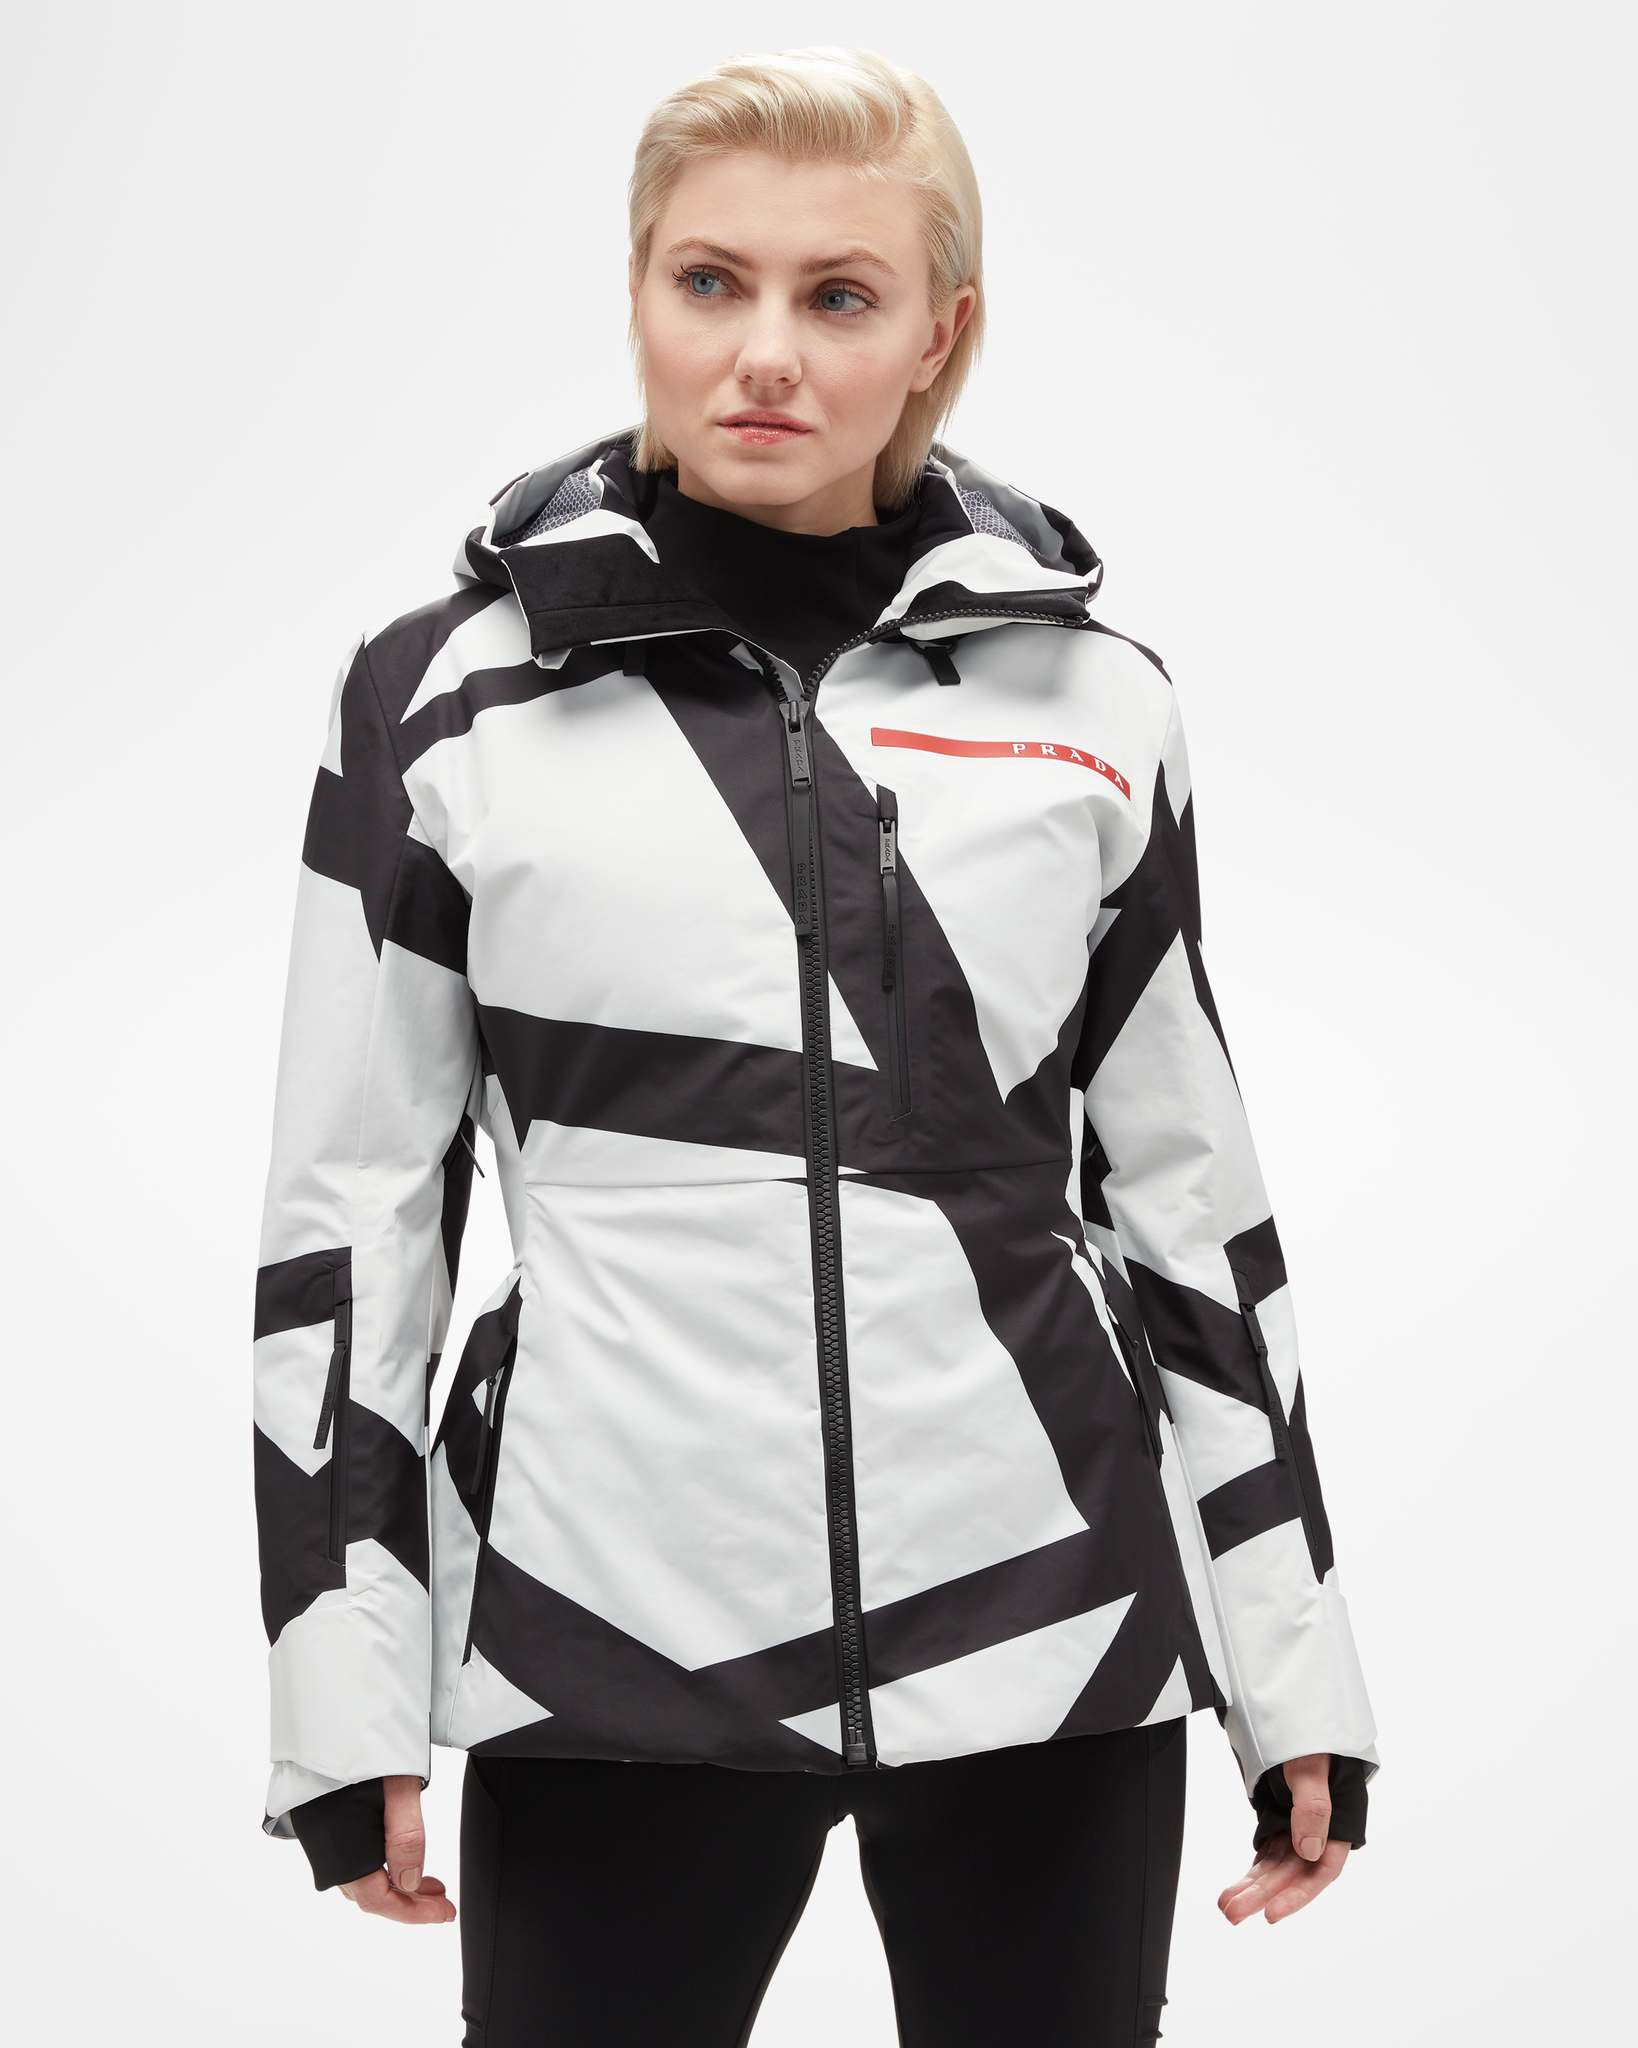 ASPENX Prada Women's Extreme Graphic | ASPENX Premium Ski Apparel